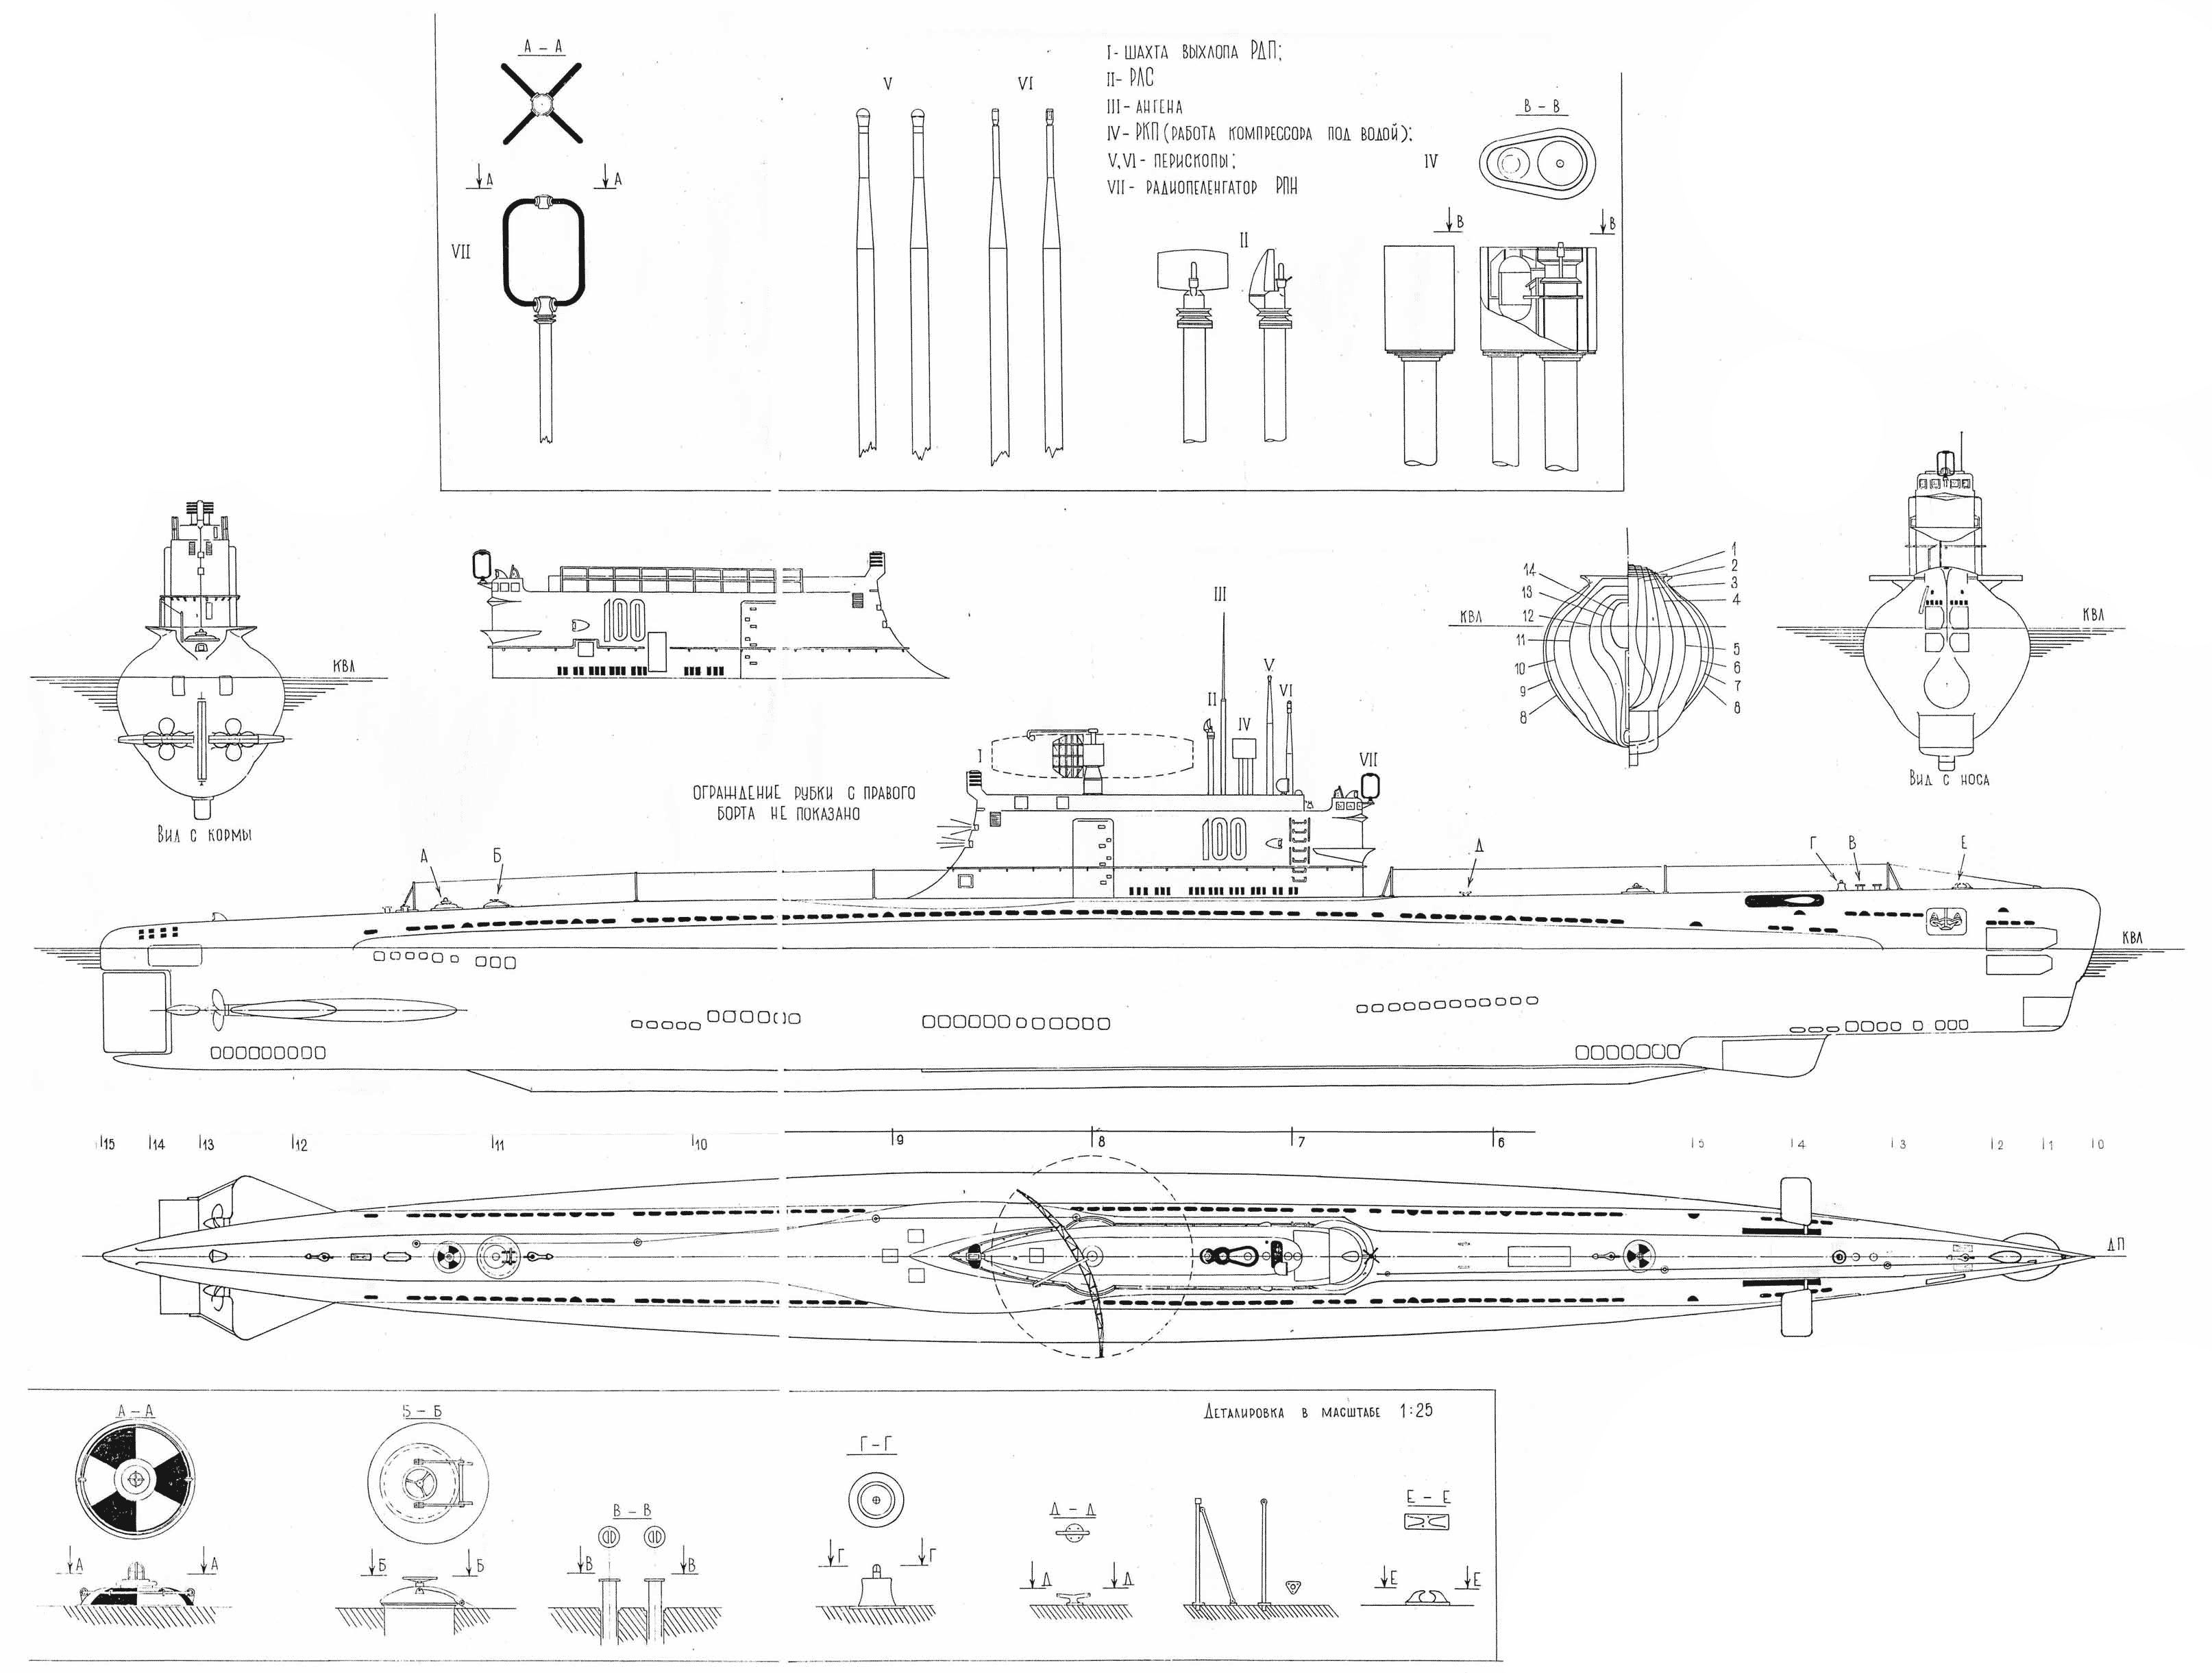 Whiskey-class submarine blueprint